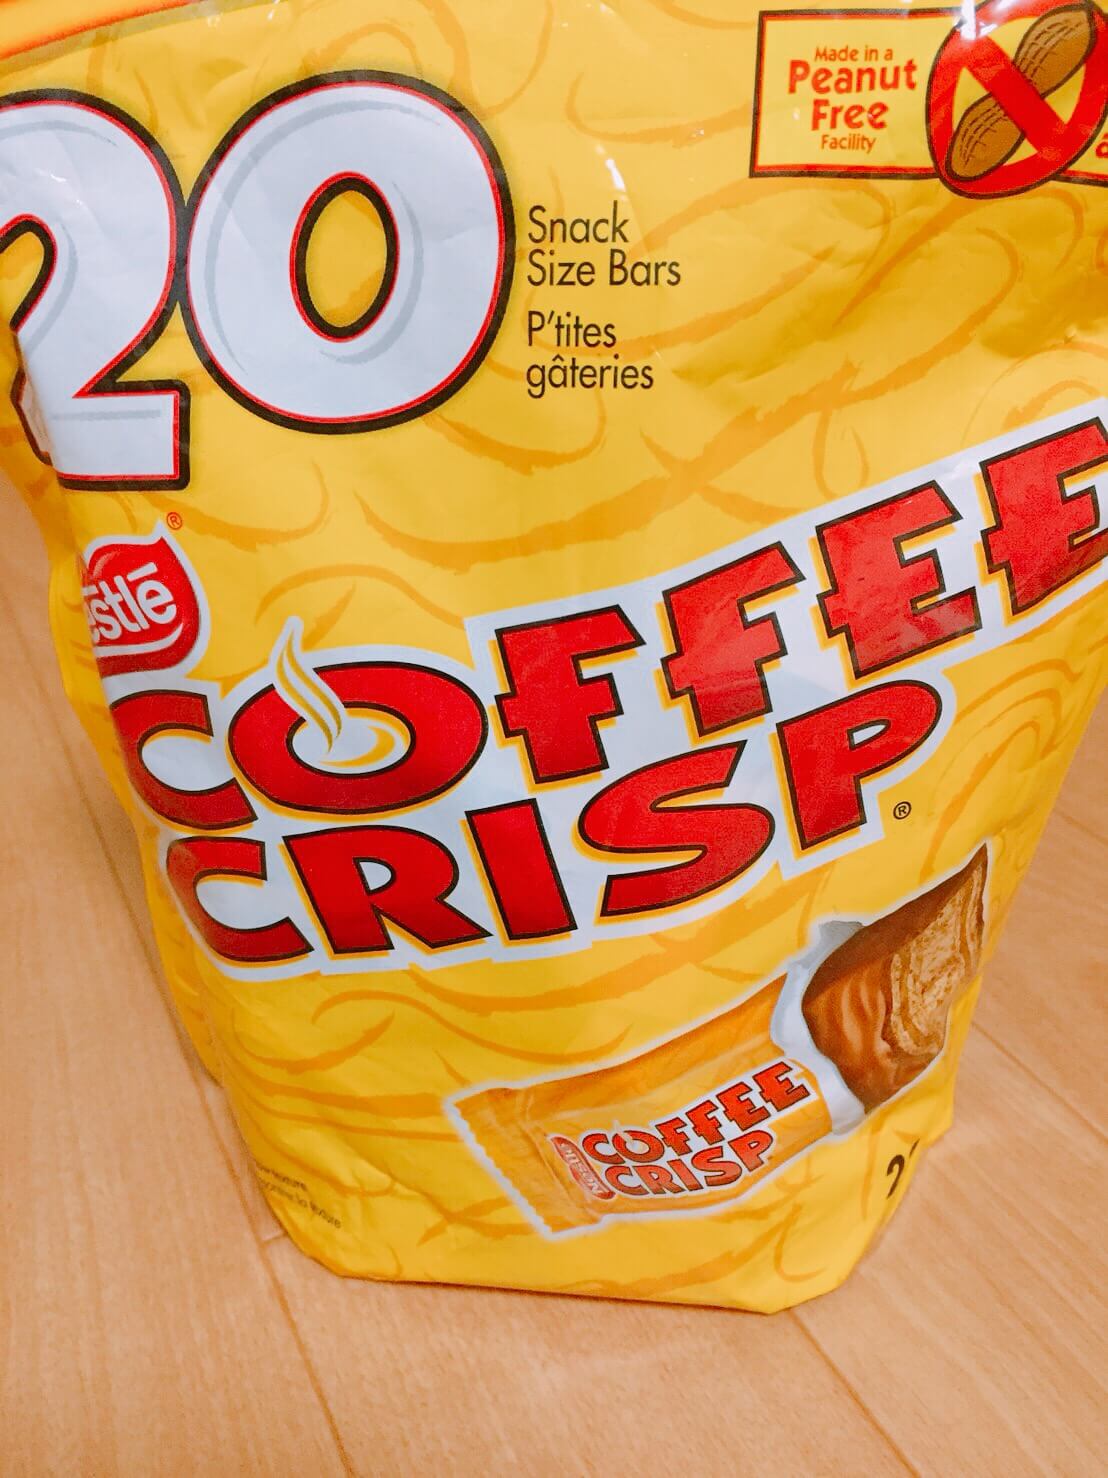 Coffee crisp